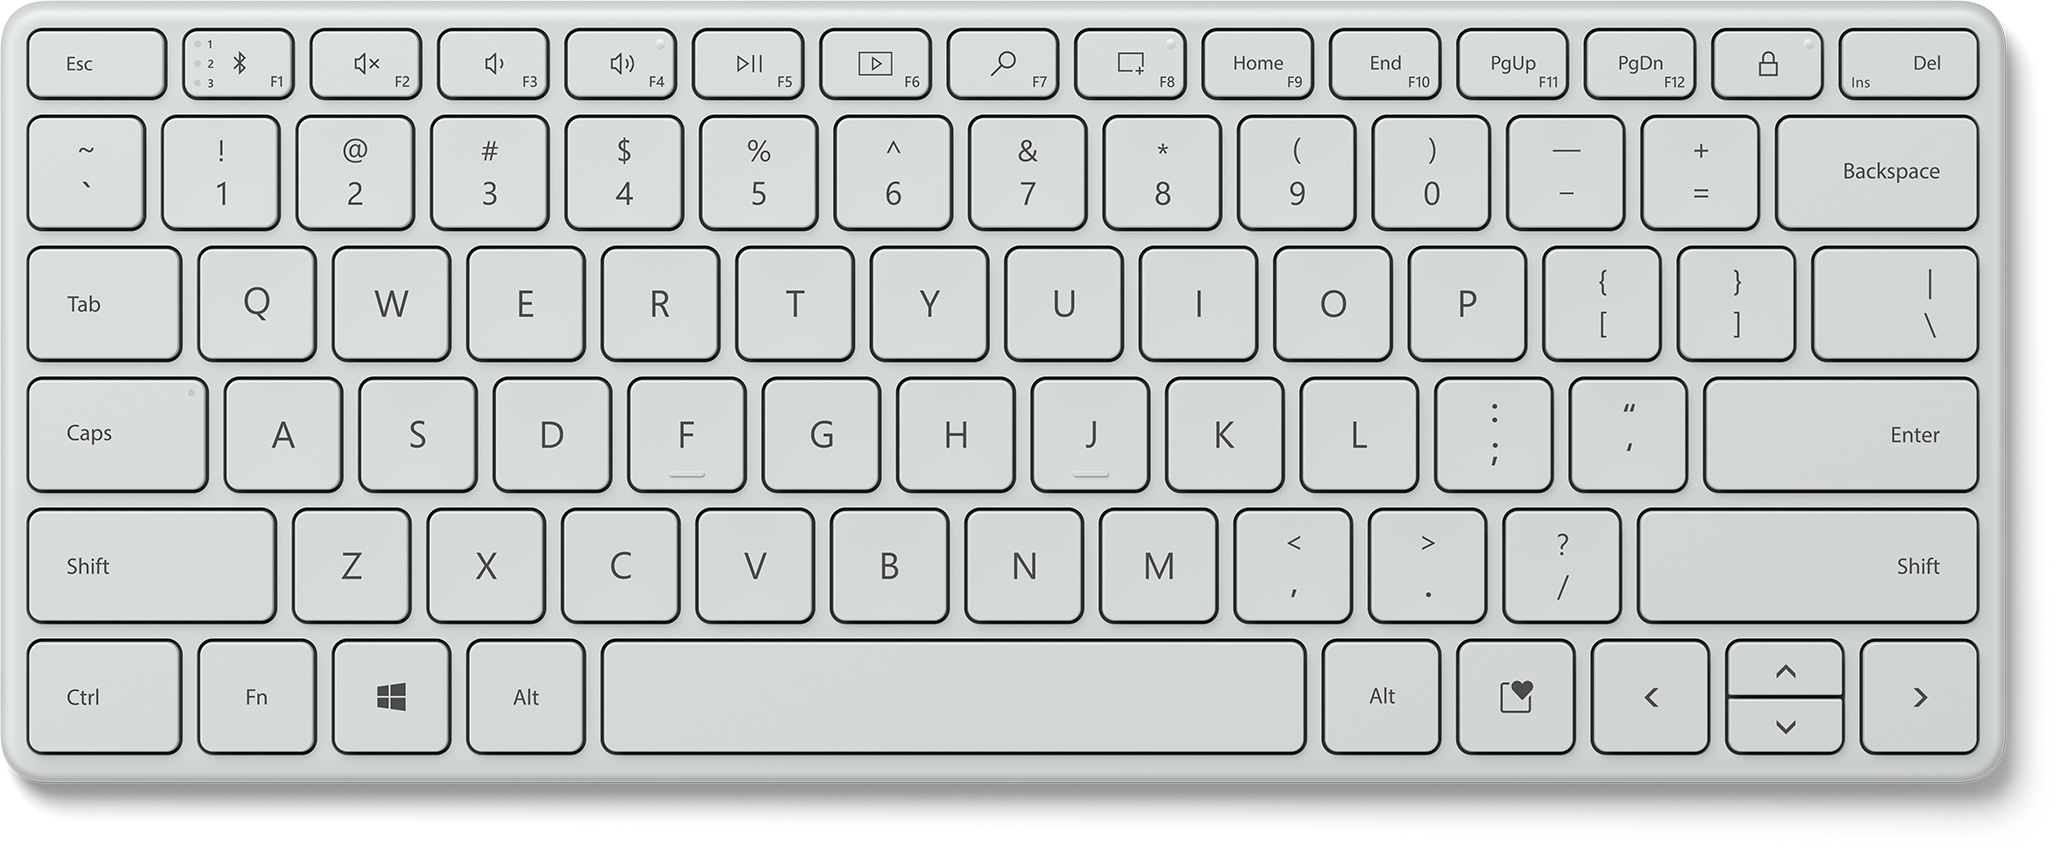 Microsoft Designer Compact Keyboard - (Arabic/English) - Glacier